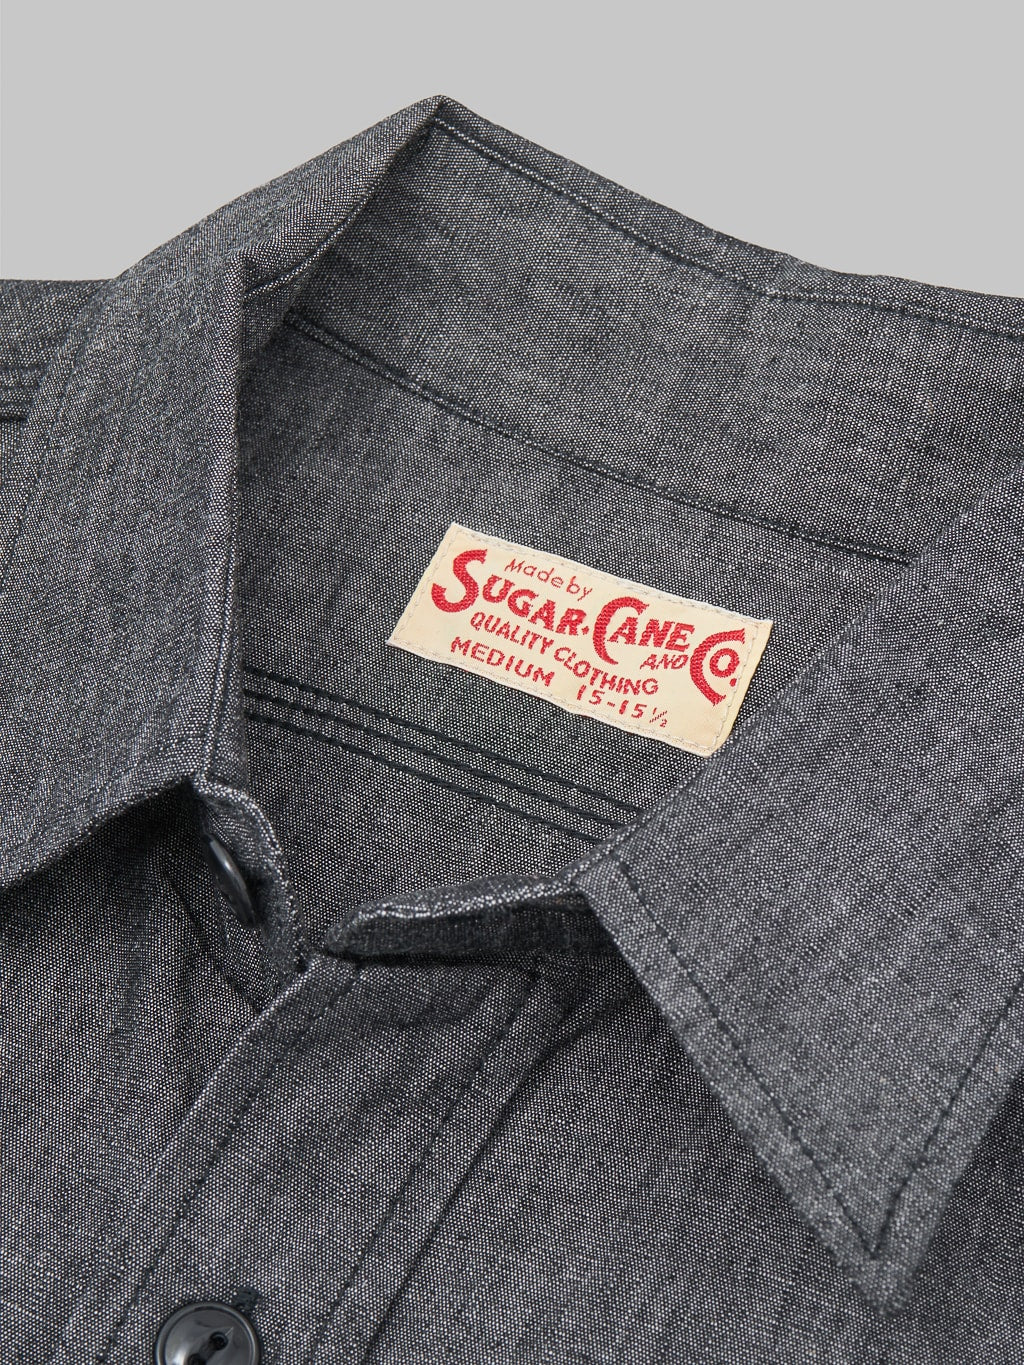 Sugar Cane Black Chambray Work Shirt interior label